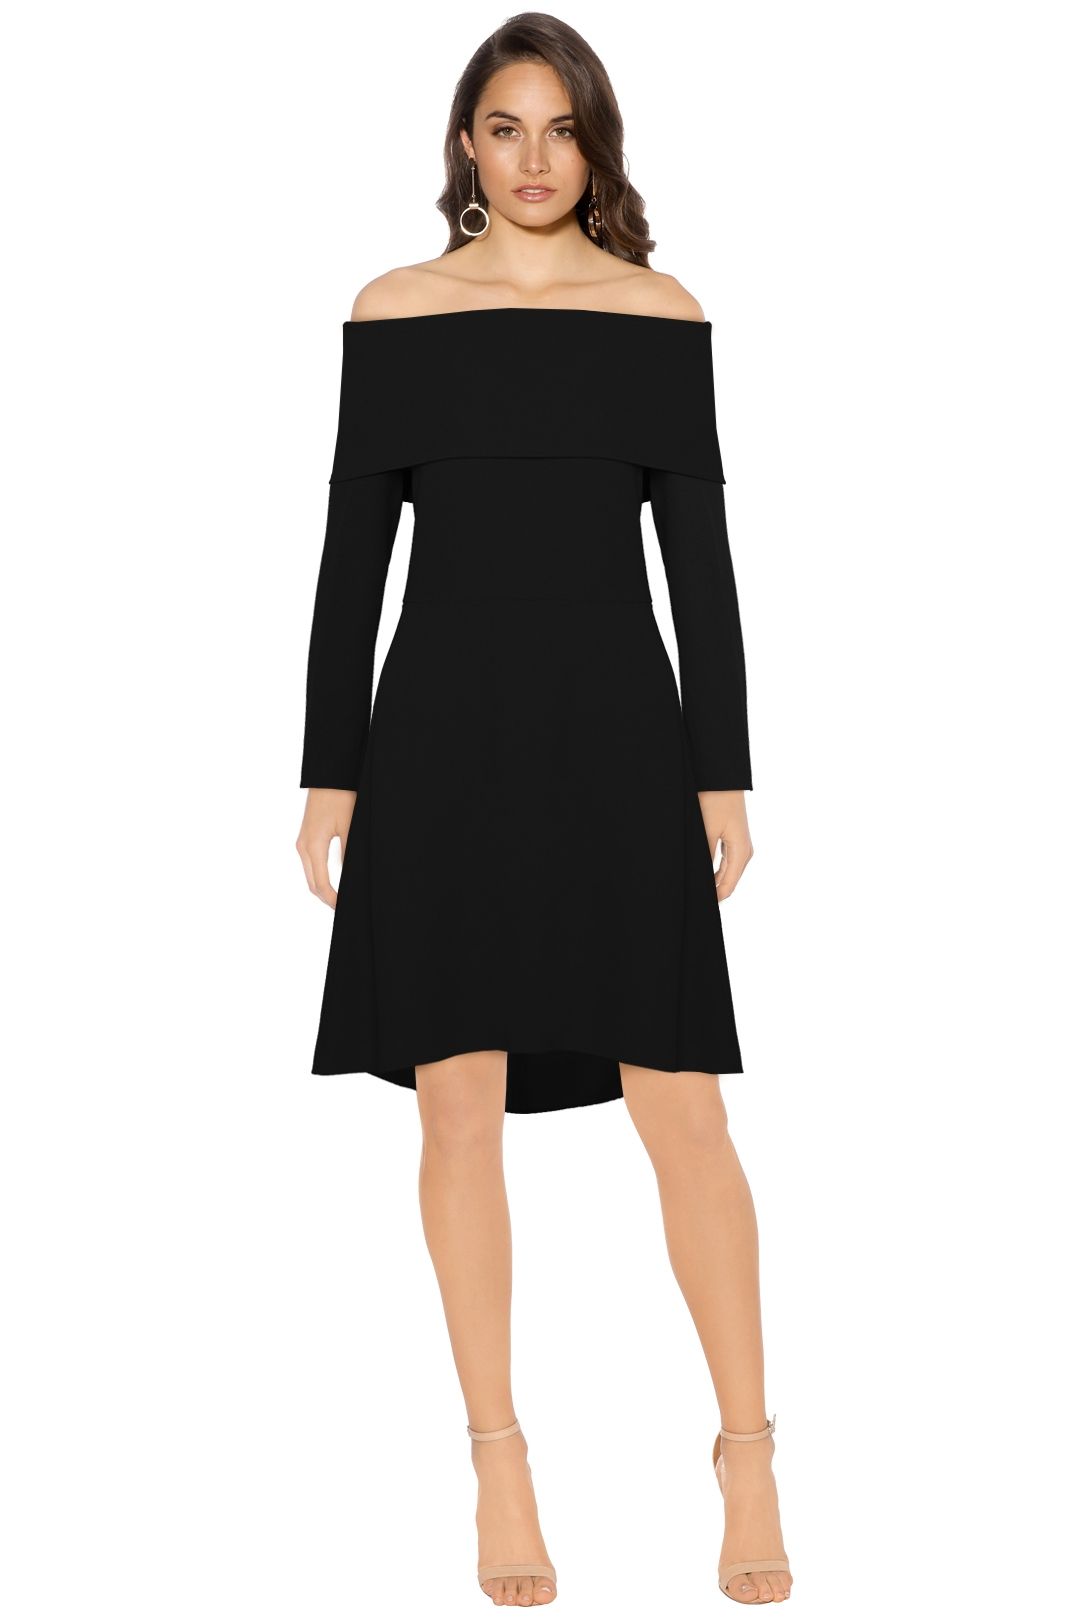 Theory - Elegant Mini Dress Black - Front